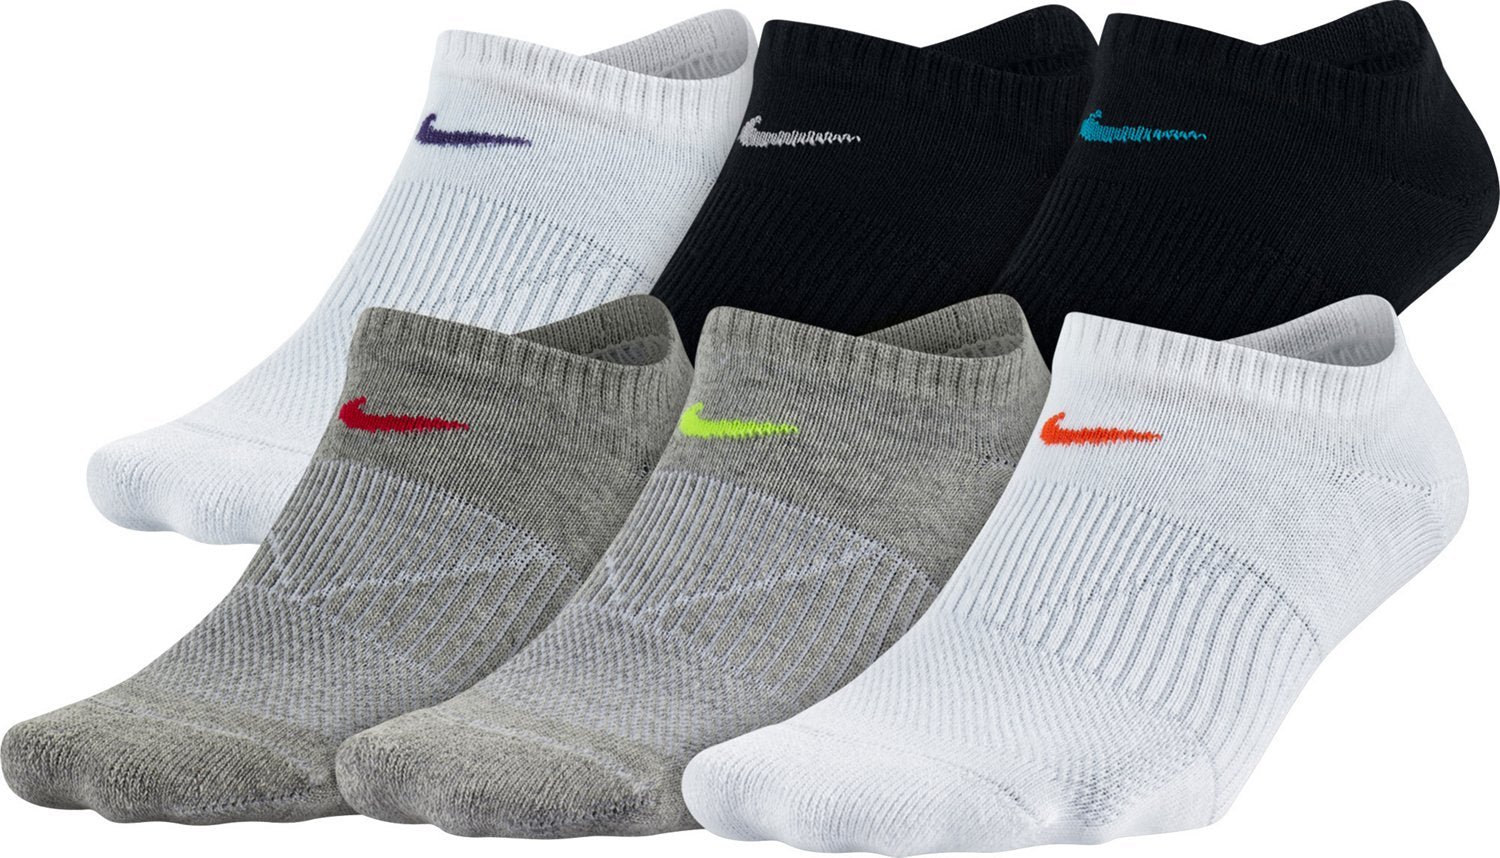 Nike Dry Fit Socks 6 Pack